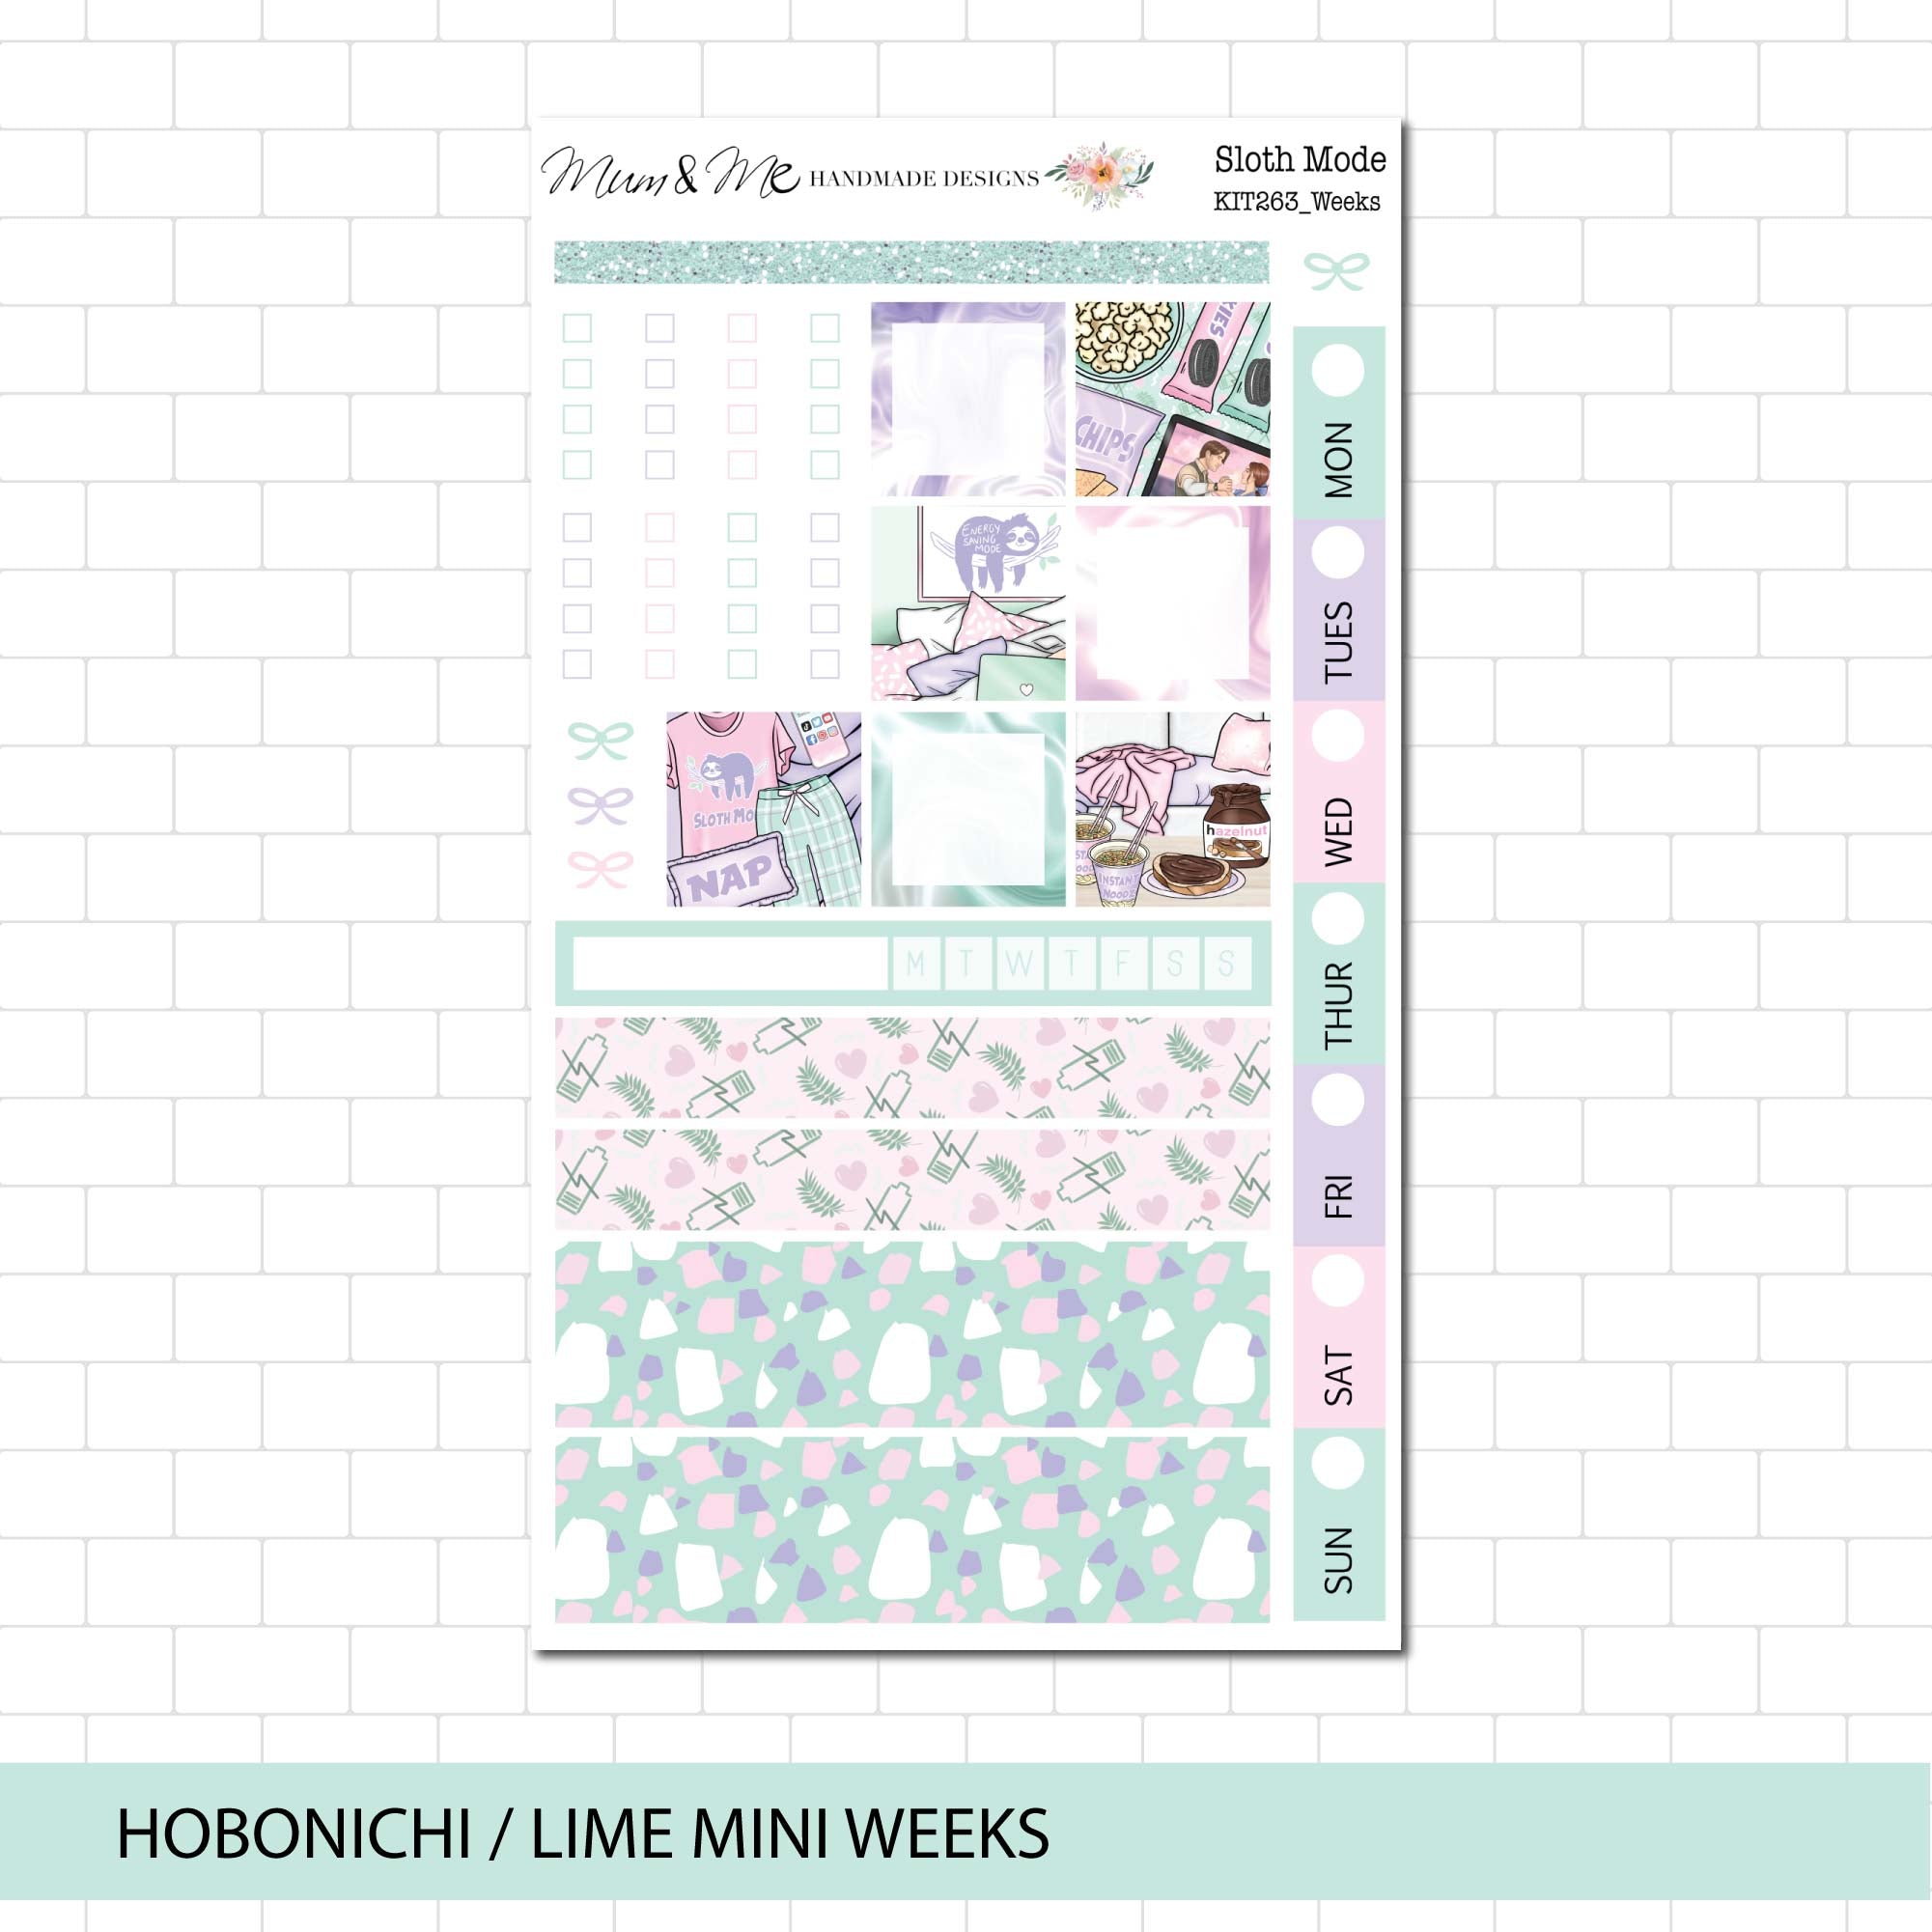 Hobonichi/Lime Weeks: Sloth Mode